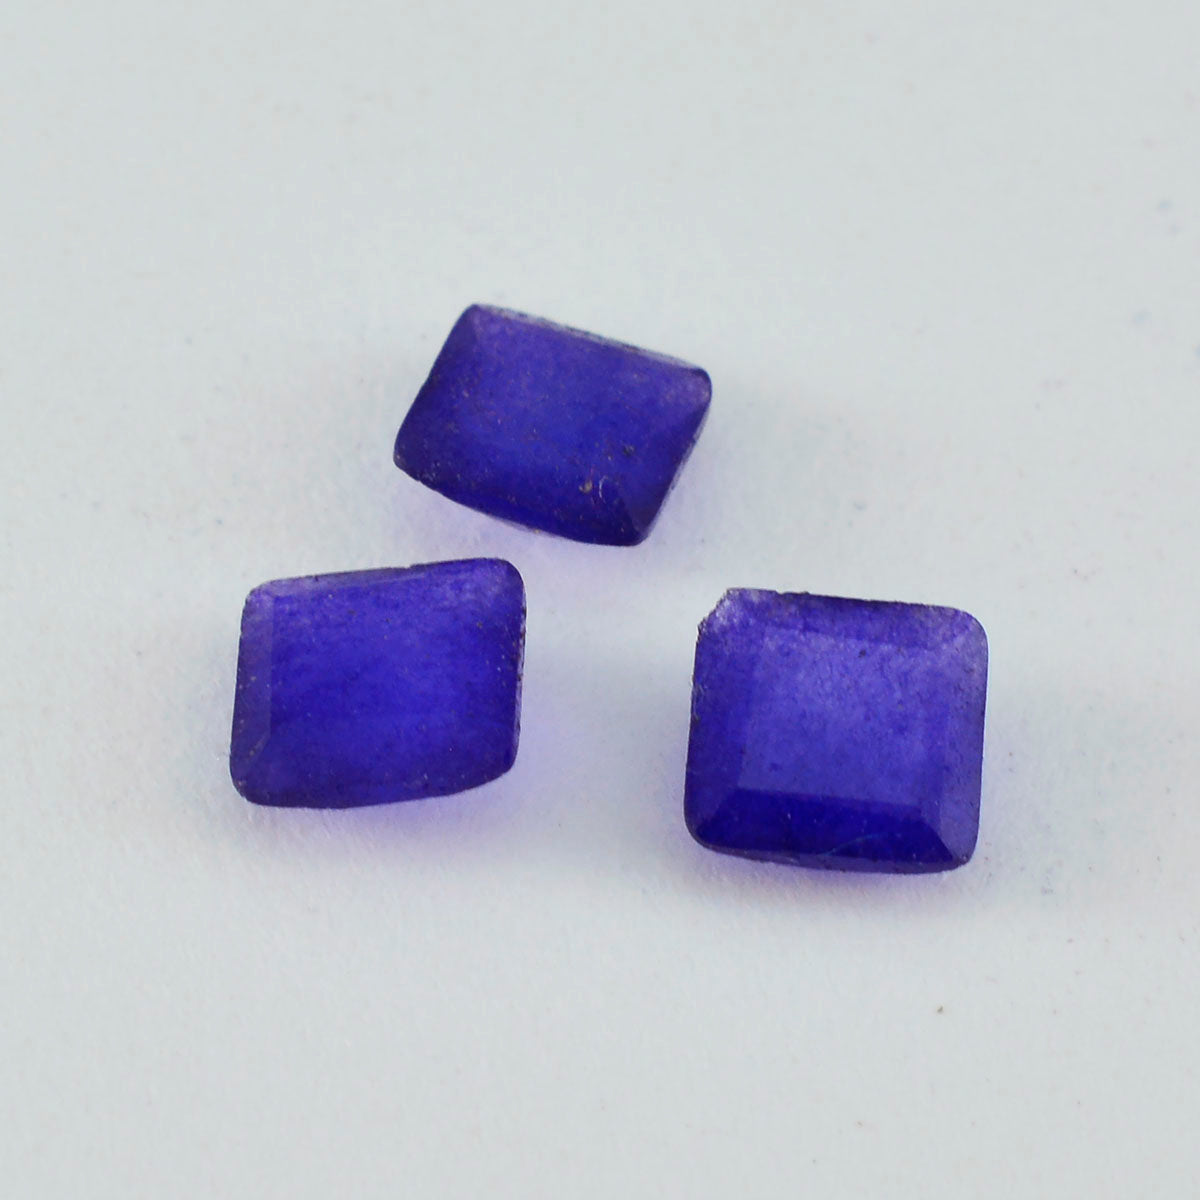 Riyogems 1PC Natural Blue Jasper Faceted 10x10 mm Square Shape good-looking Quality Gems